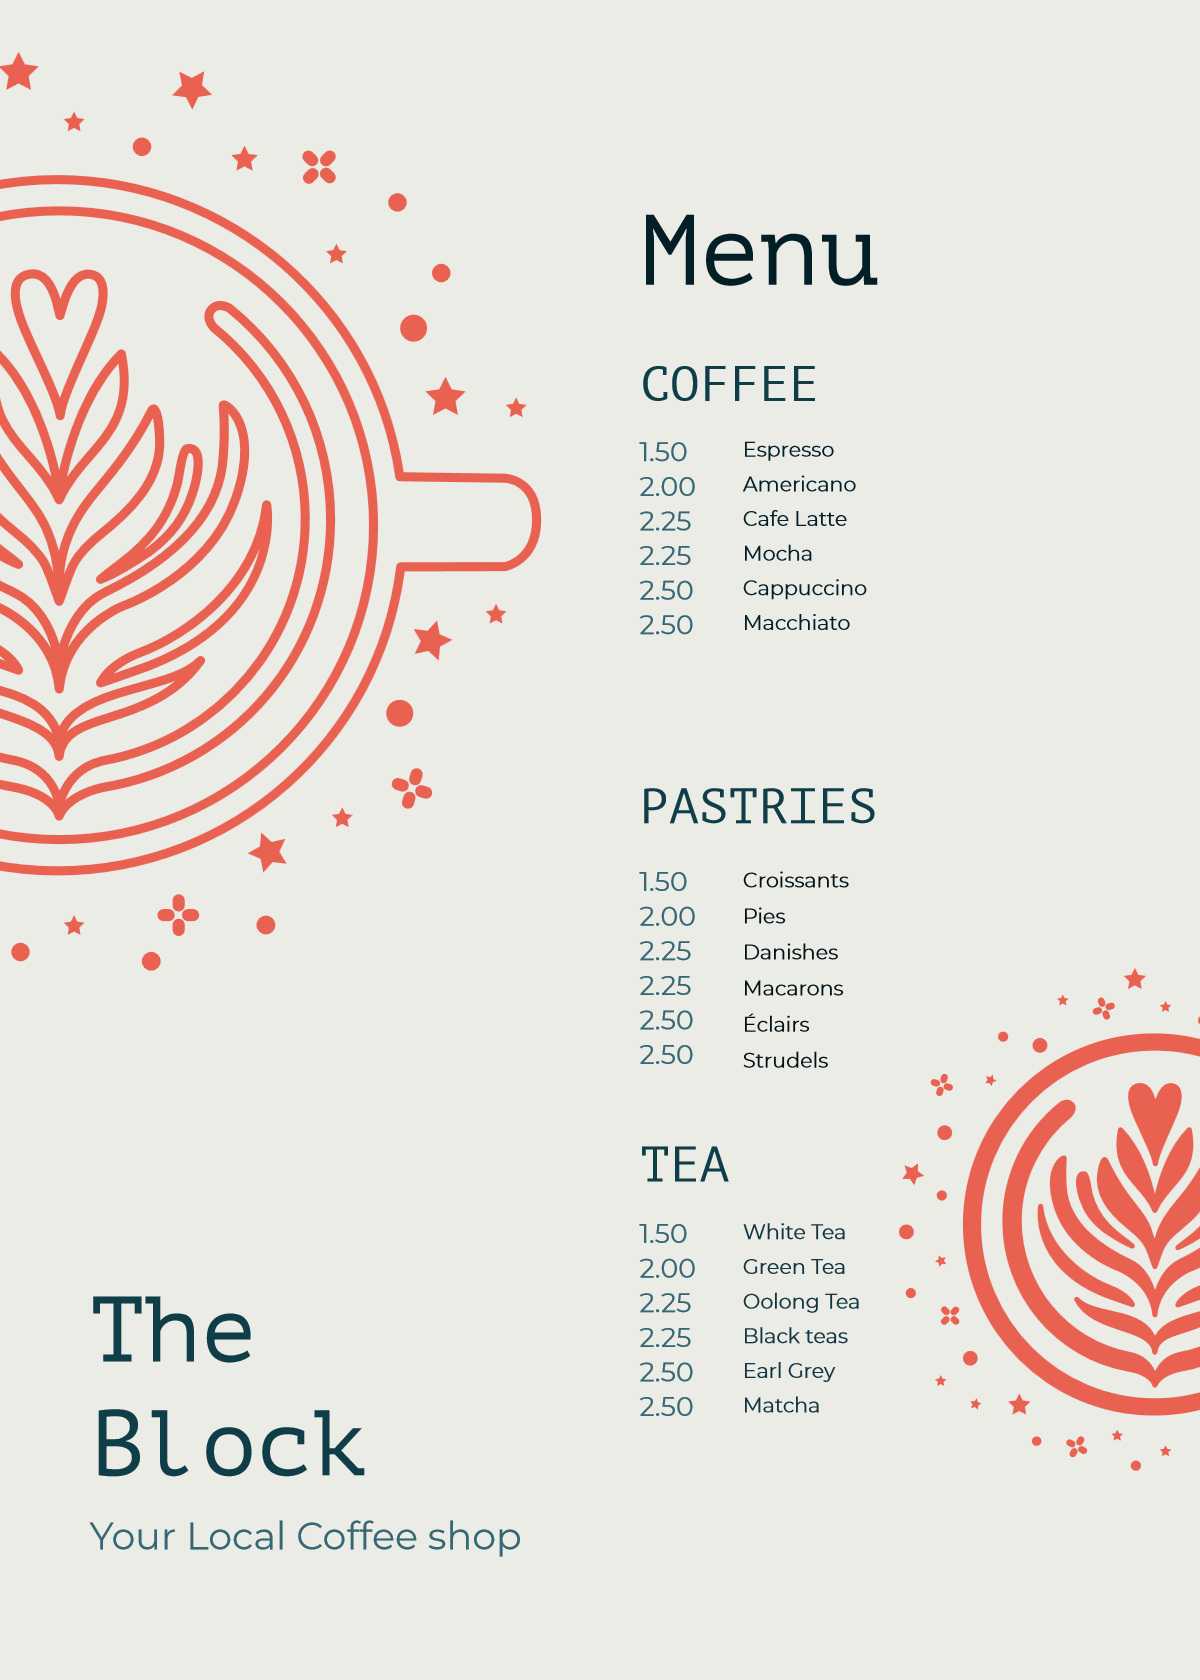 32 Free Simple Menu Templates For Restaurants, Cafes, And With Regard To Free Cafe Menu Templates For Word